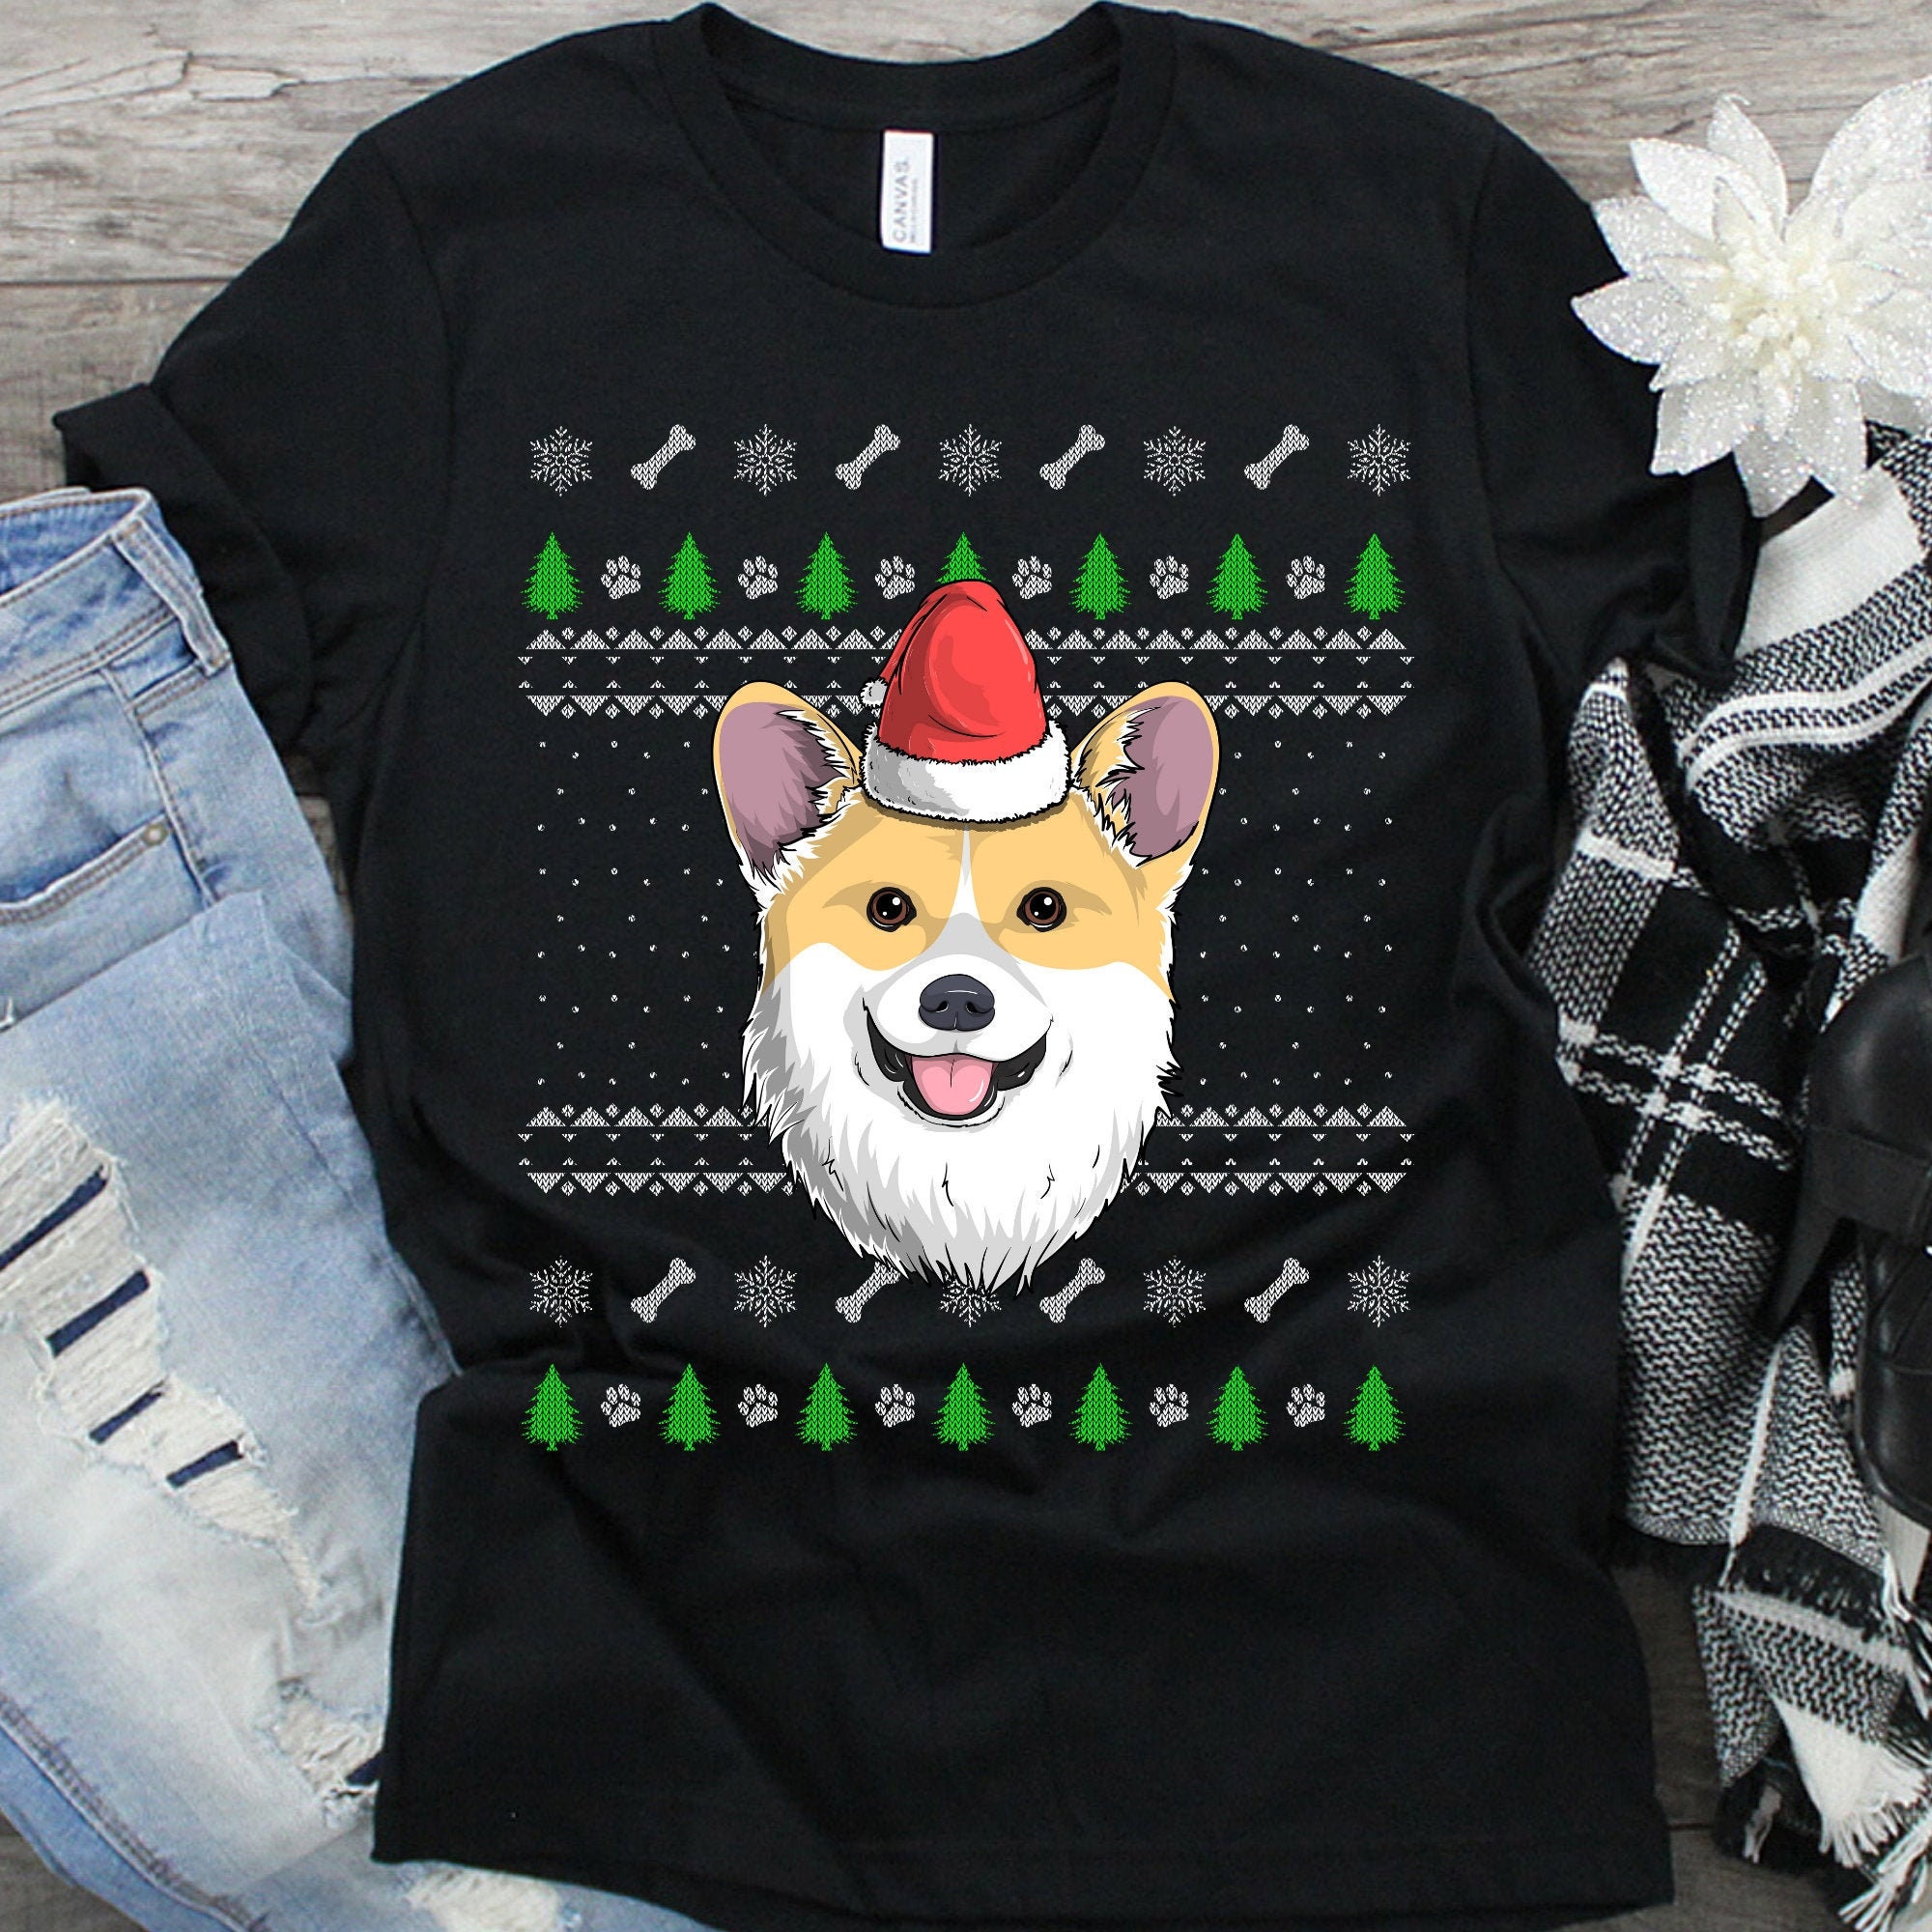 Corgi Dog Santa Claus Ugly Christmas Sweater Pattern | Etsy